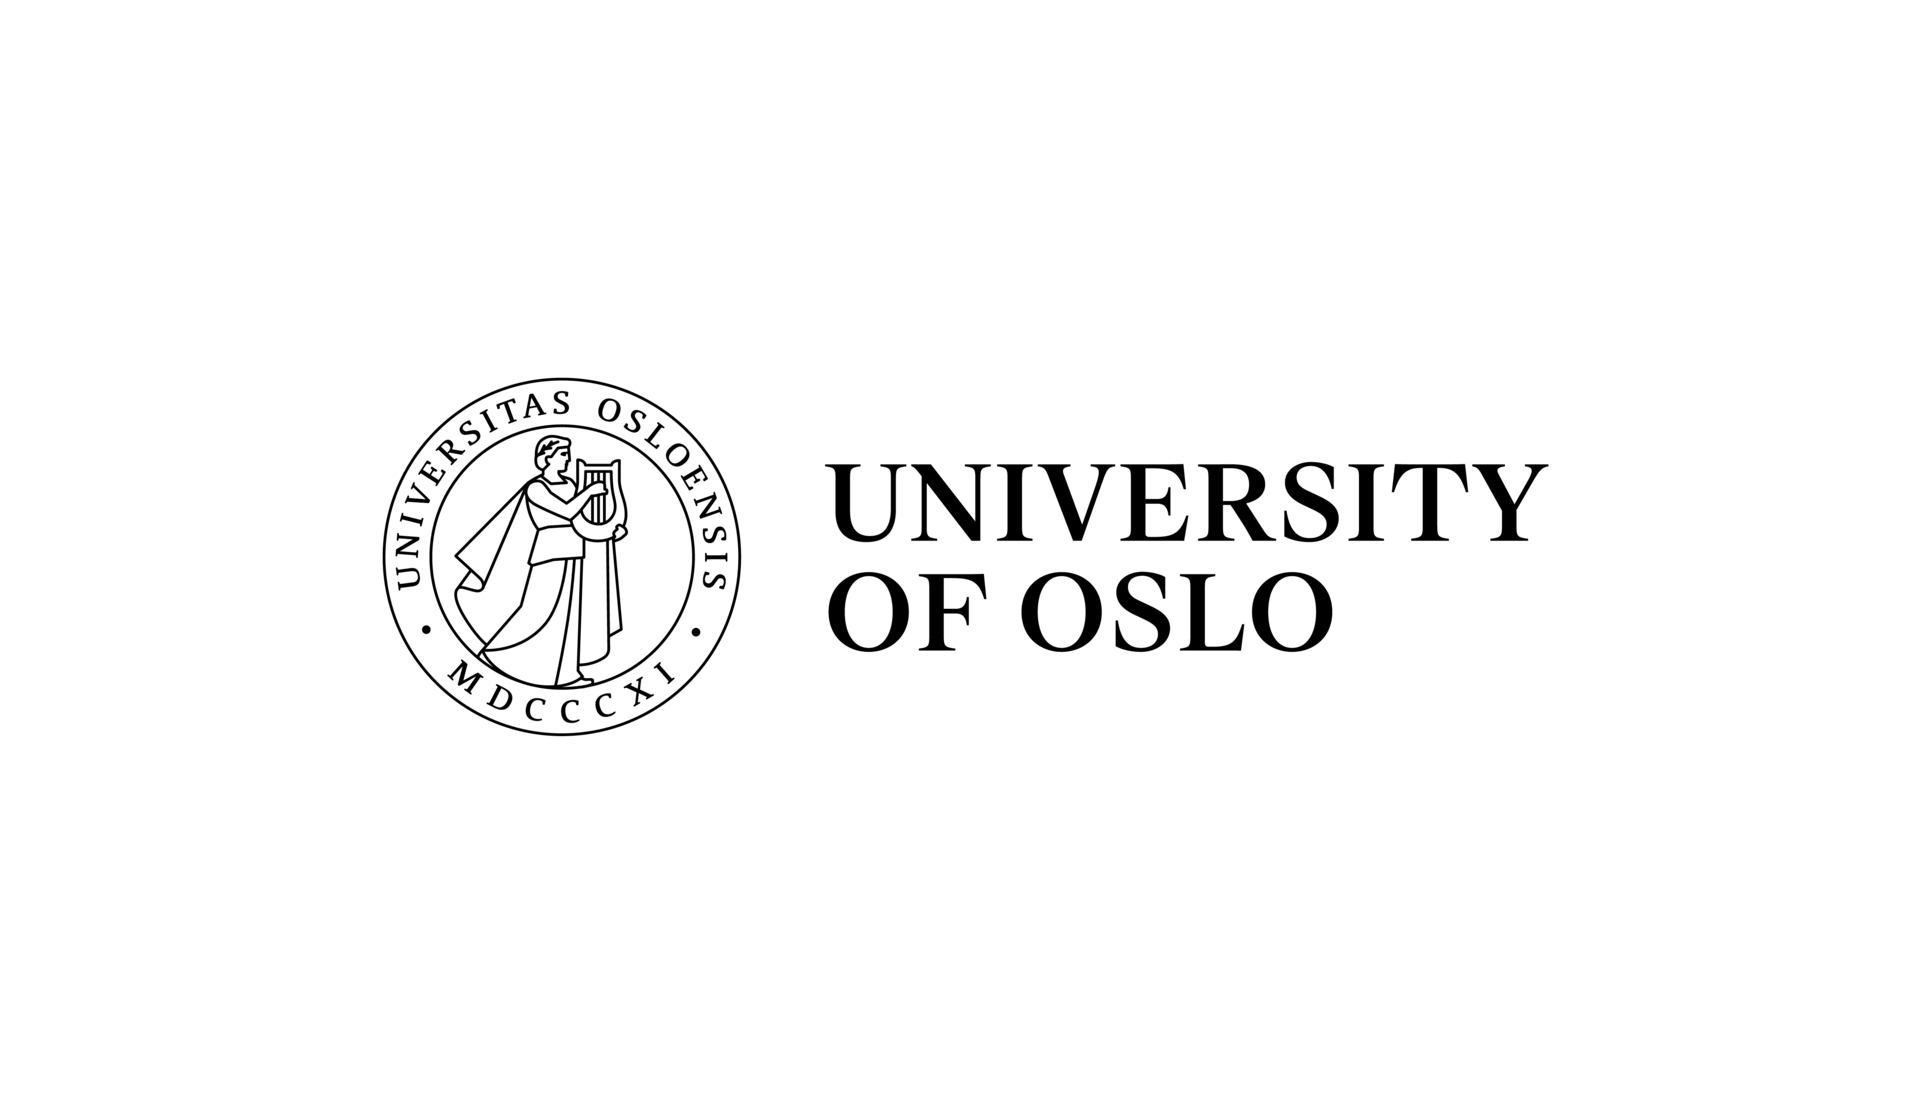 logo of University of Oslo with Apollo symbol